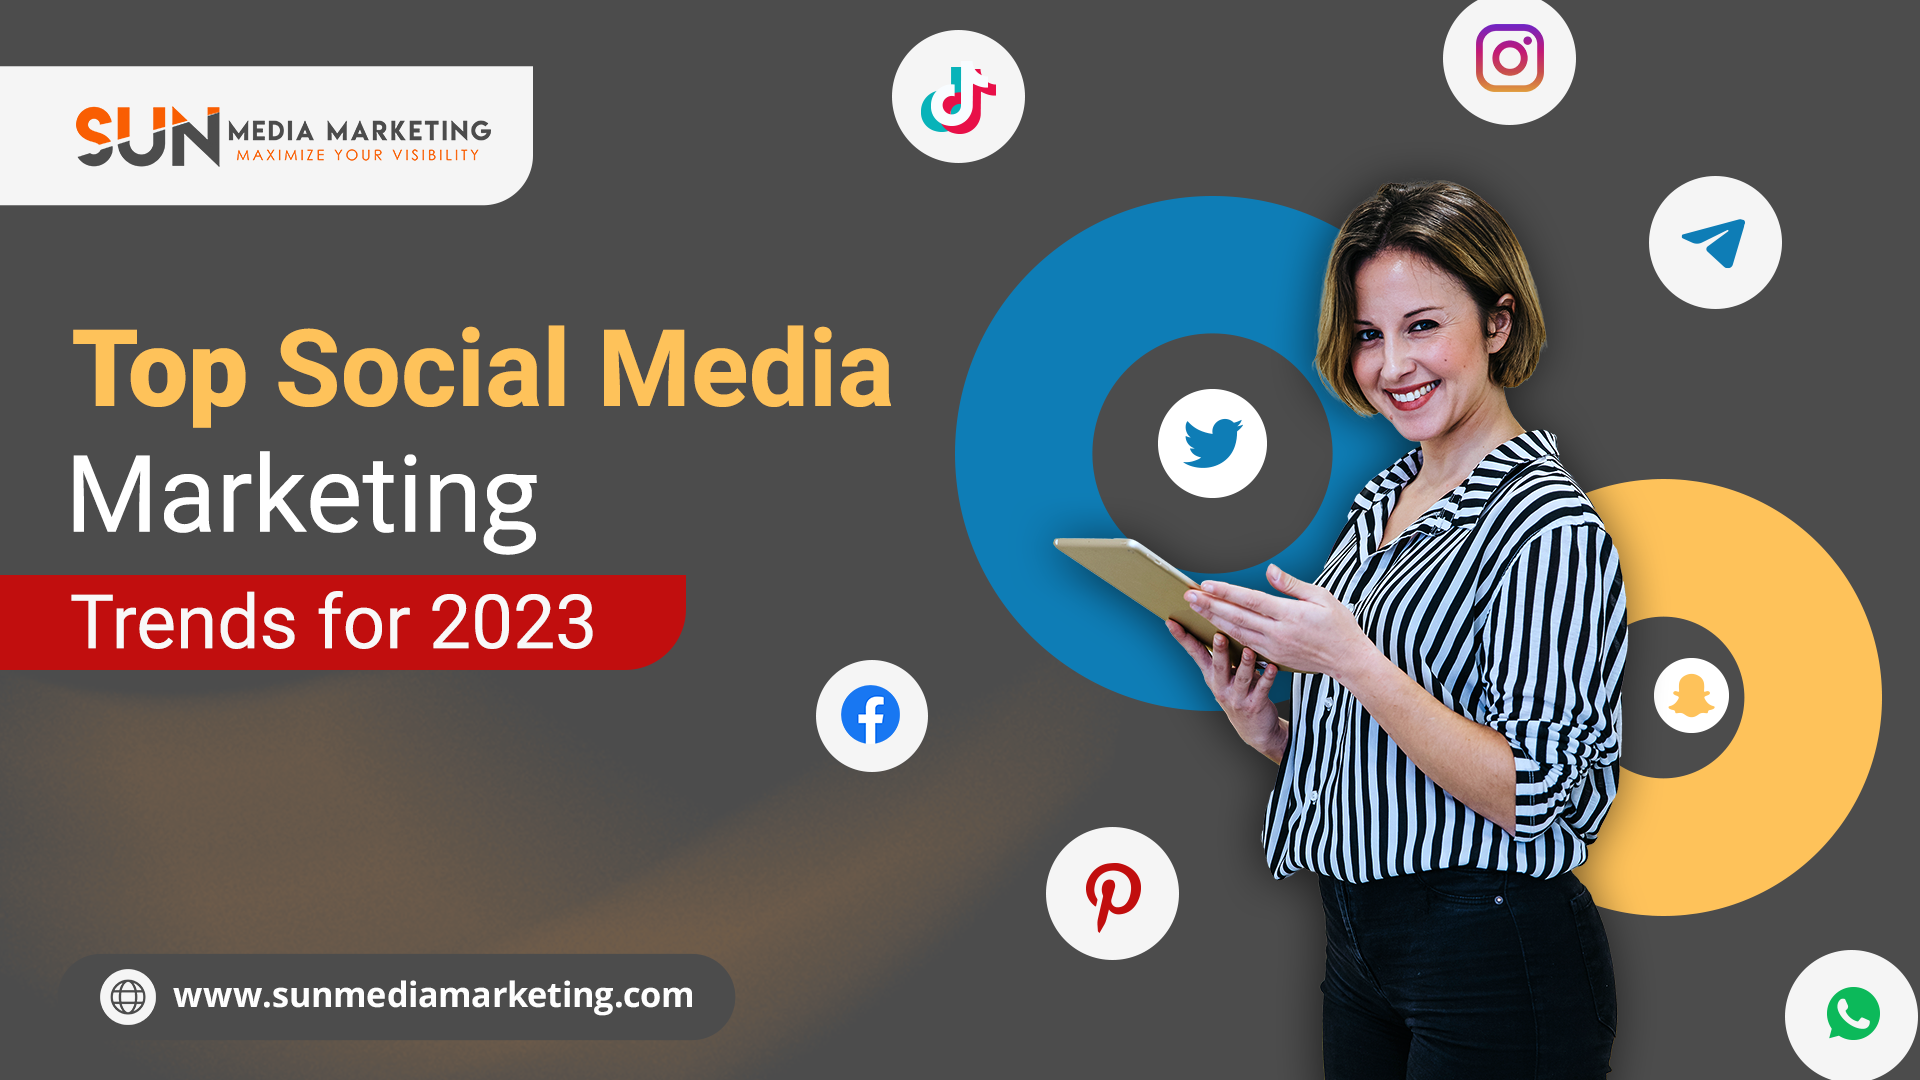 Top Social Media Marketing Trends for 2023